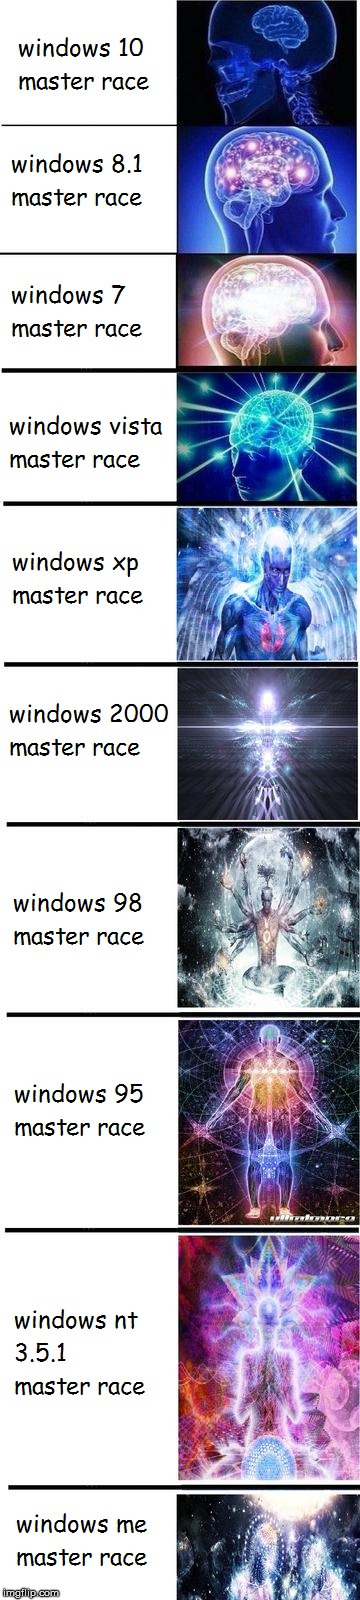 Expanding Brain - Windows Master Race | image tagged in expanding brain,expanding brain extended,brain meme,windows,windows master race,windows xp | made w/ Imgflip meme maker